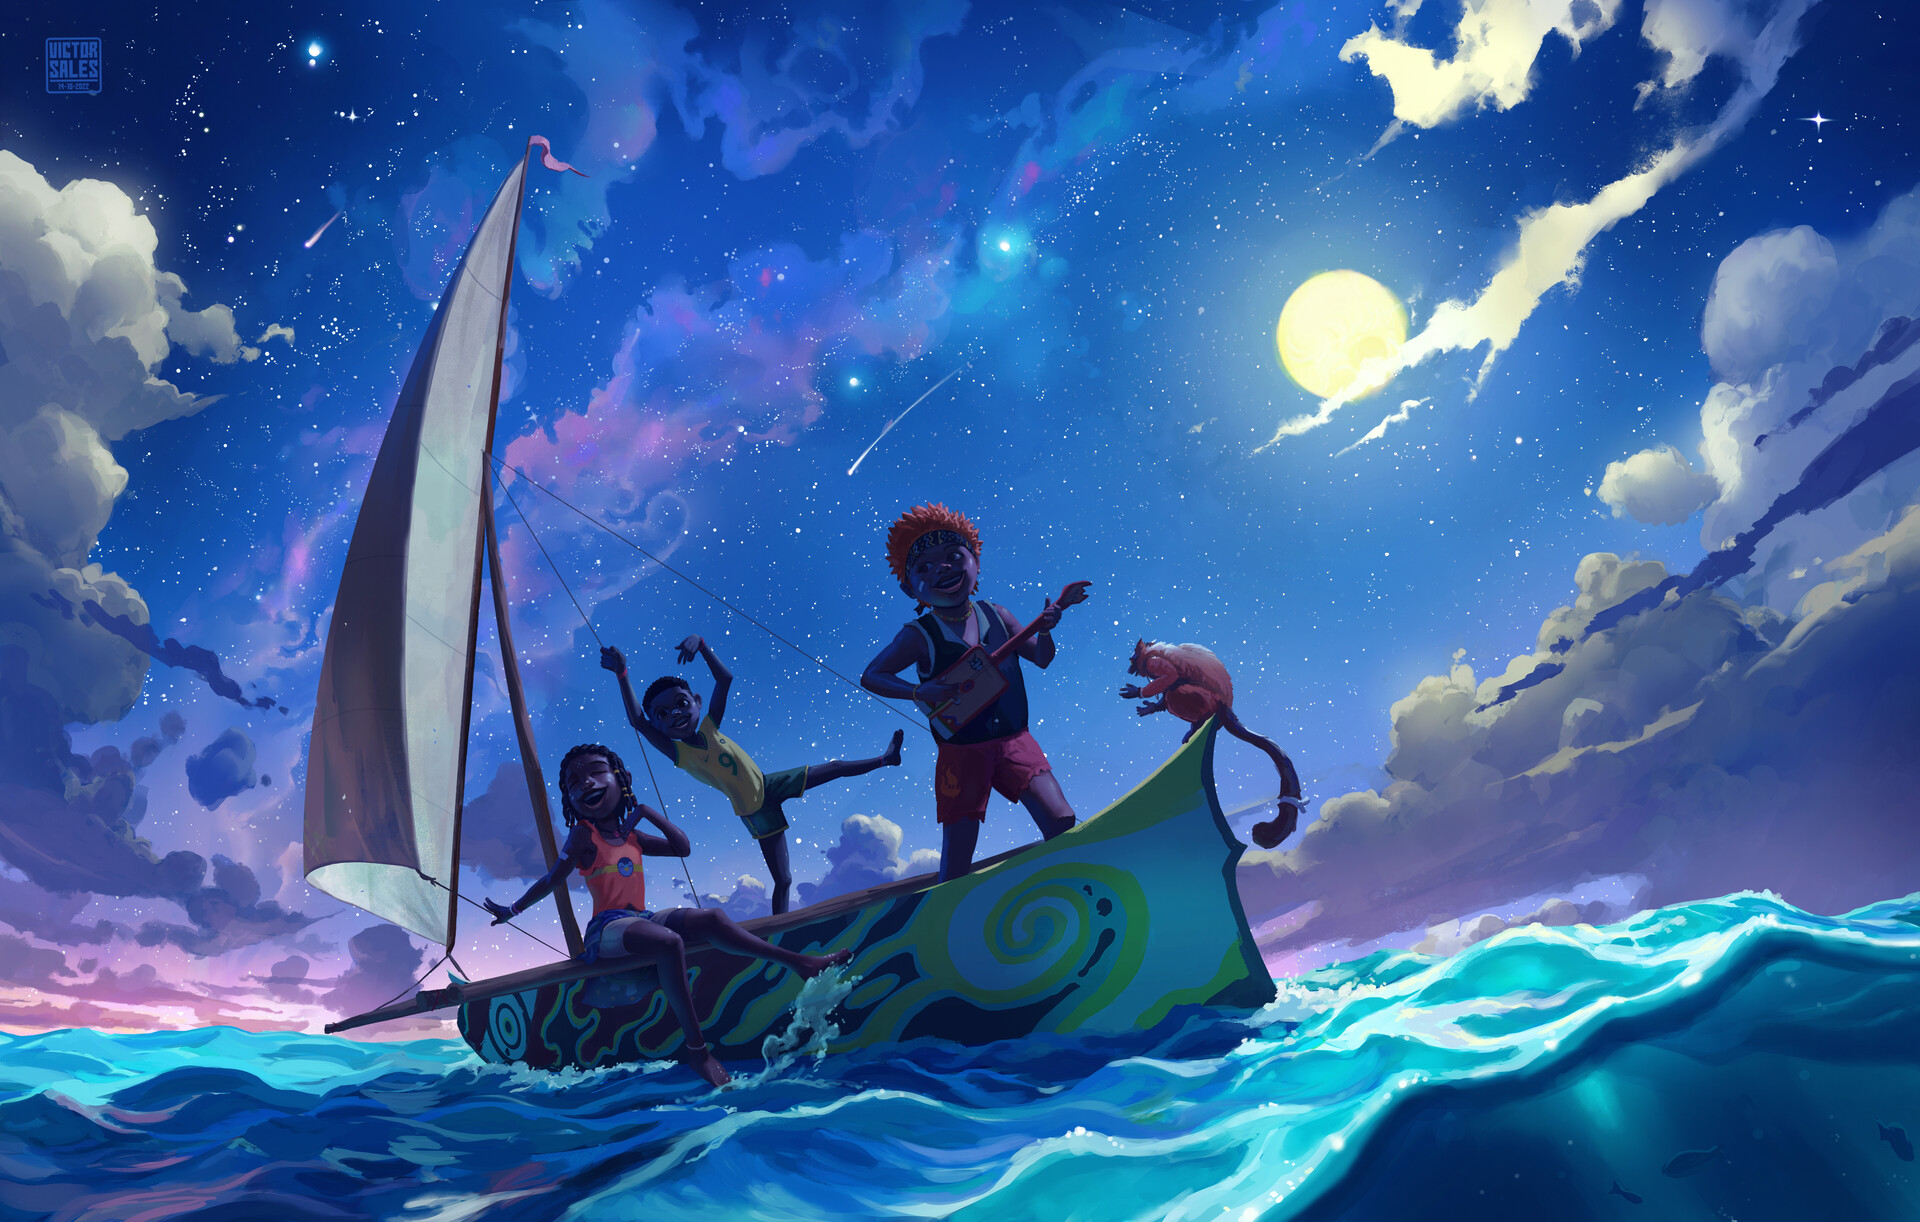 Victor Sales Digital Art Fantasy Art ArtStation Sailing Ship Night Sky Full Moon Children Monkey Gui 1920x1222